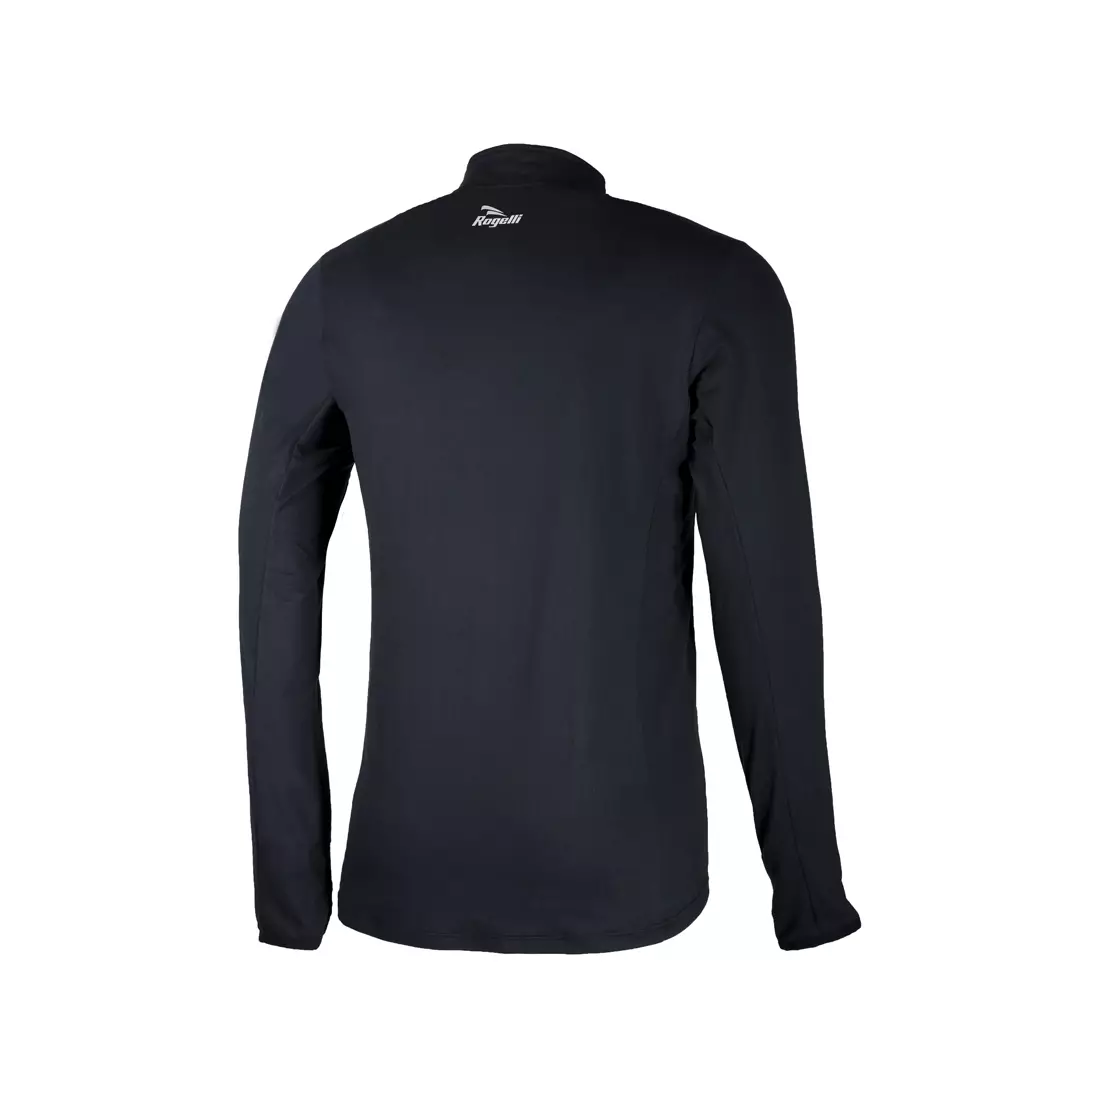 ROGELLI CAMPTON 2.0 running shirt with long sleeves, black